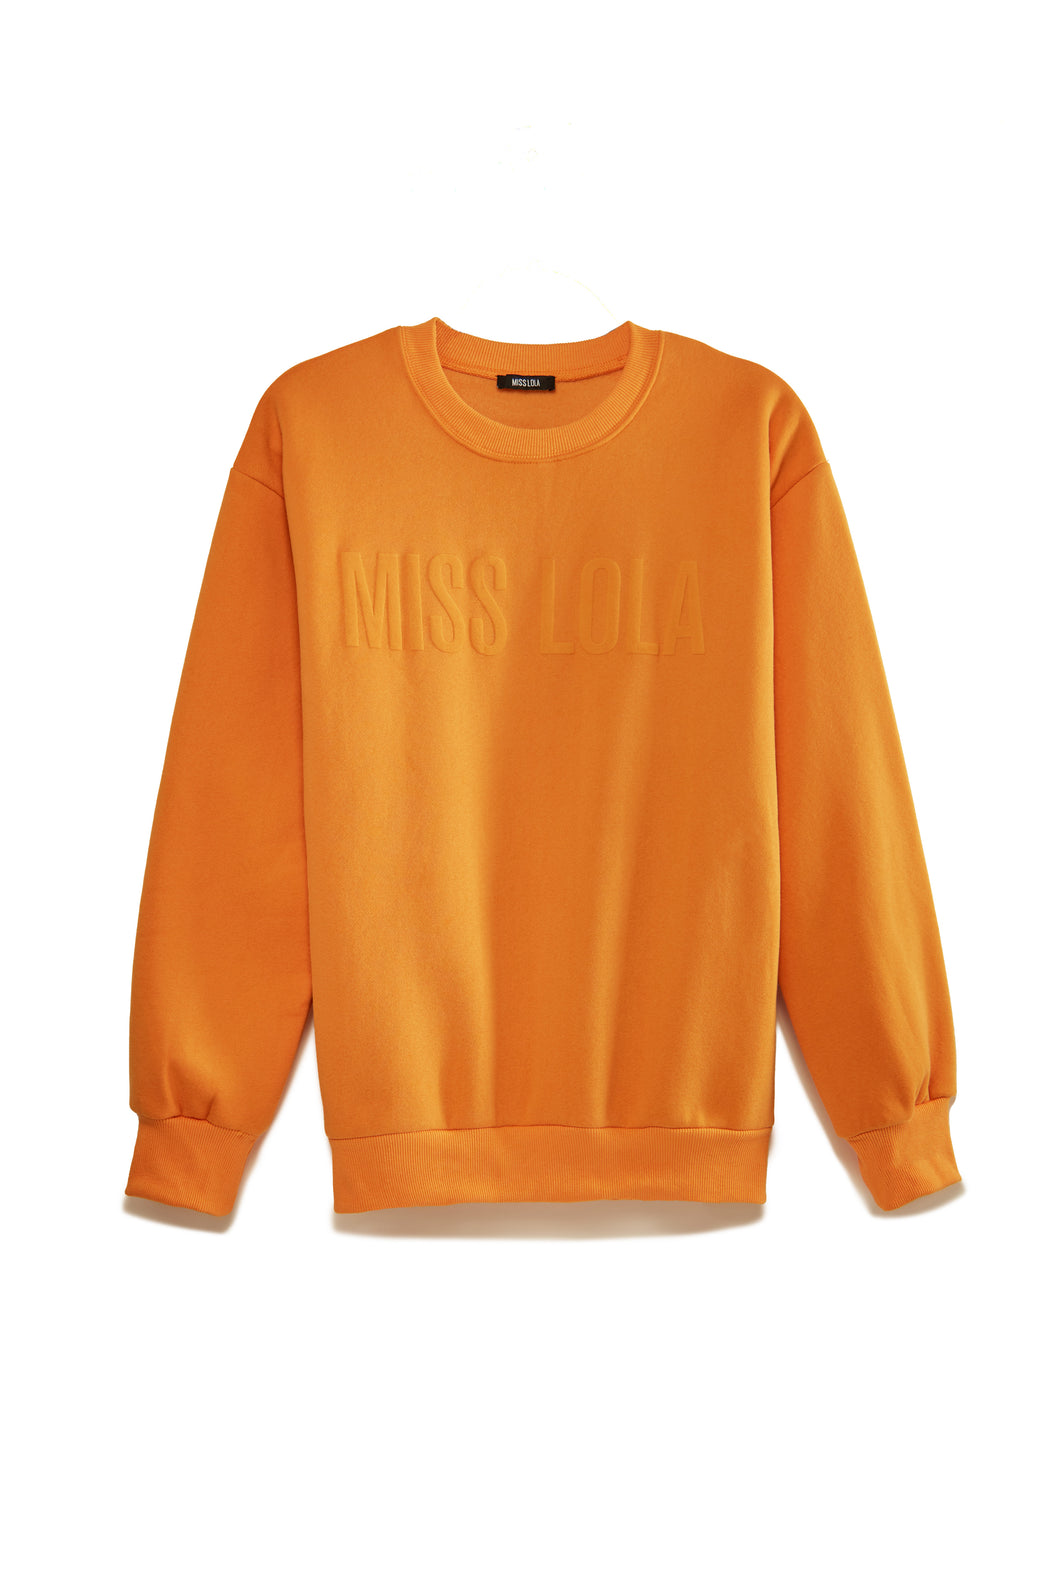 Miss Lola Exclusive Crewneck Sweater - Orange